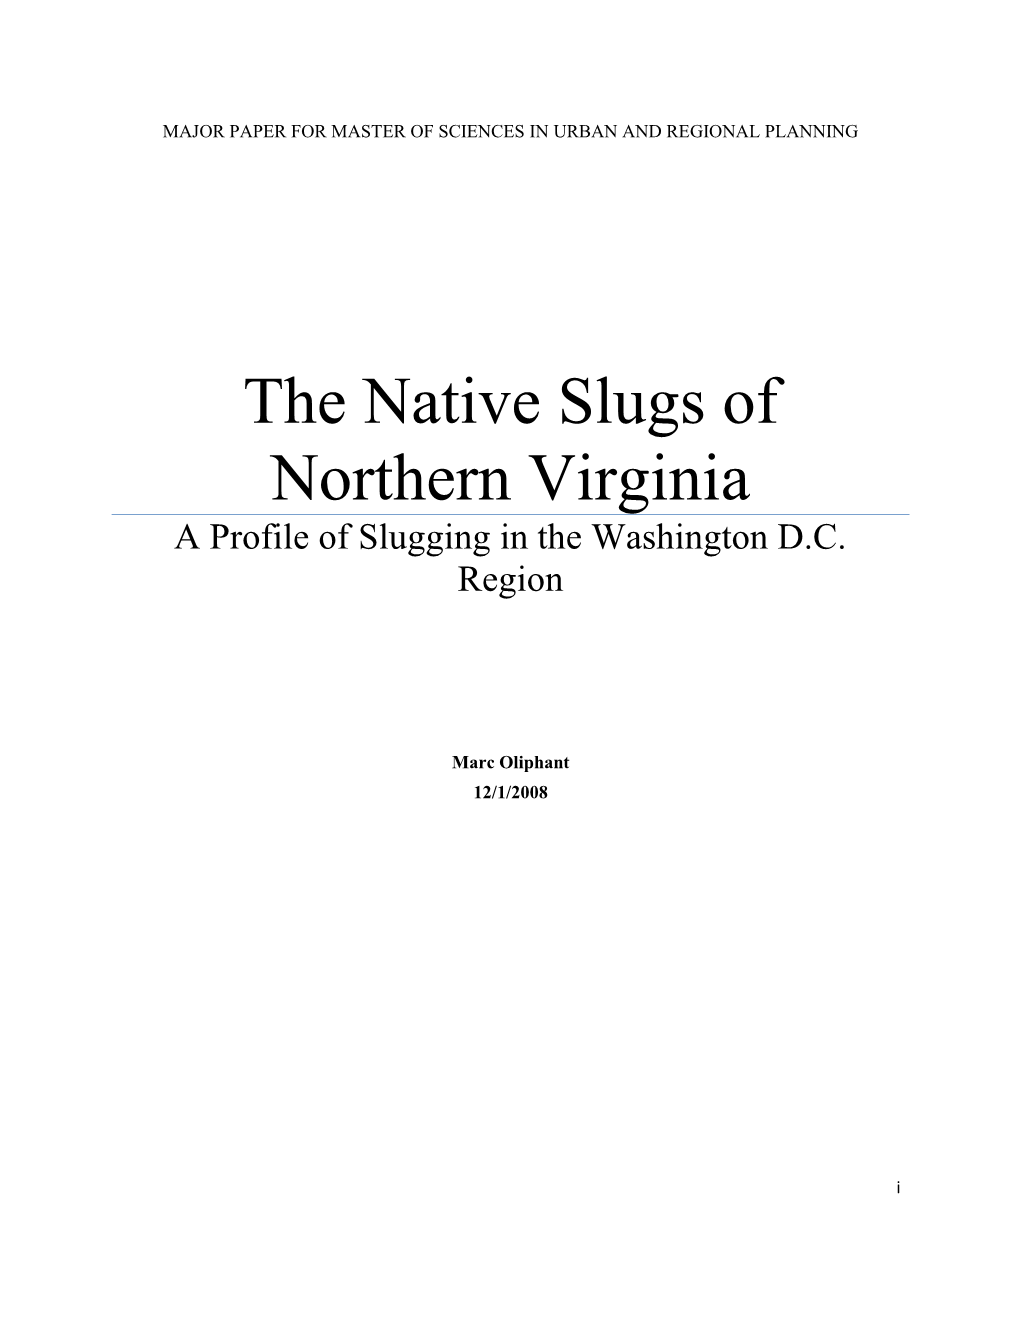 The Native Slugs of Northern Virginia a Profile of Slugging in the Washington D.C